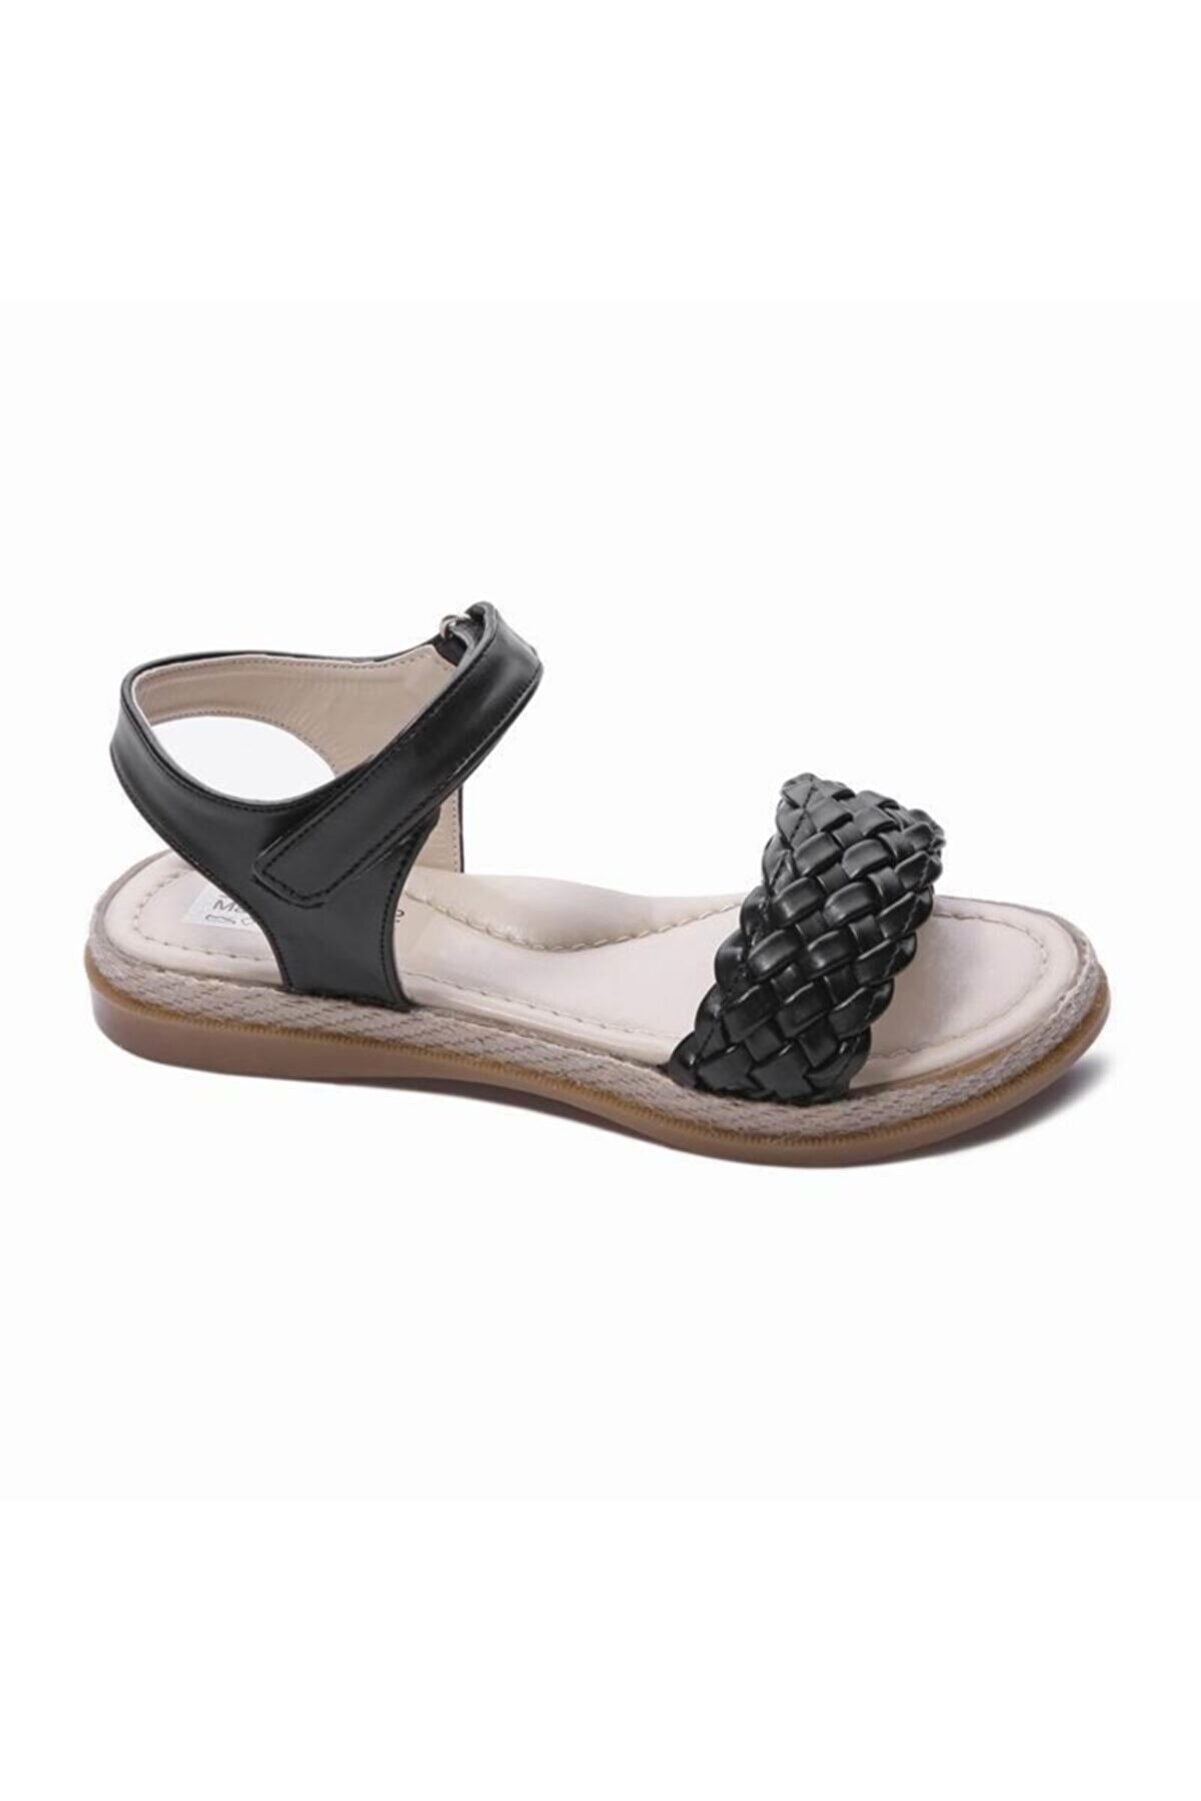 Sanbe 503 T 705 31-36 Sandalet Siyah